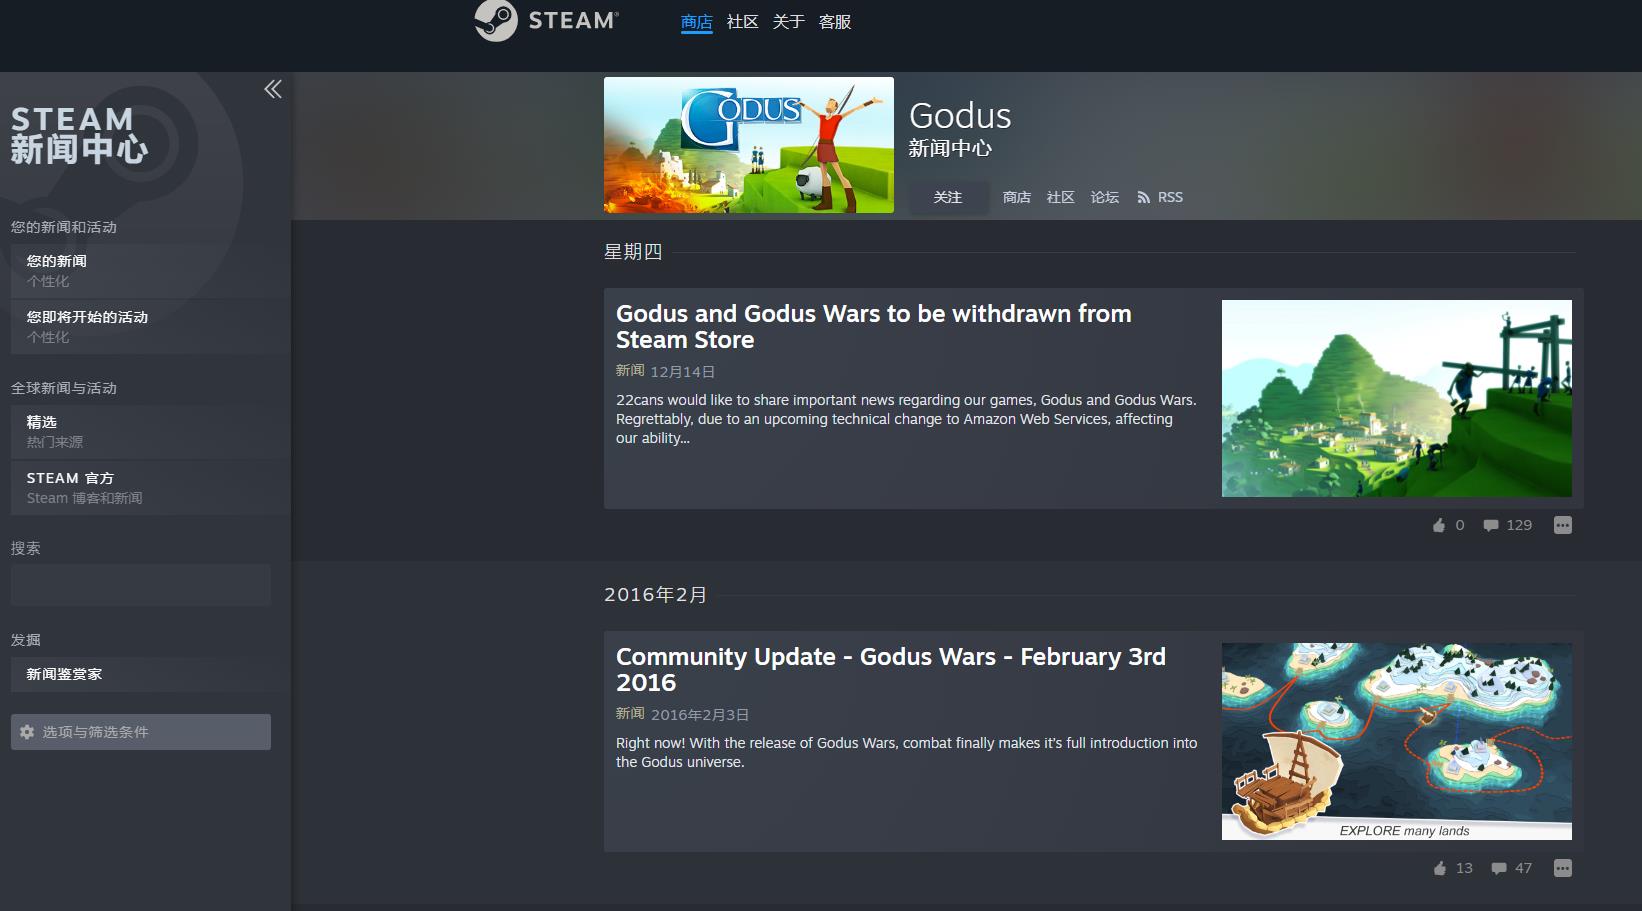 天主饰演游戏《Godus》以及《Godus Wars》确认从Steam下架